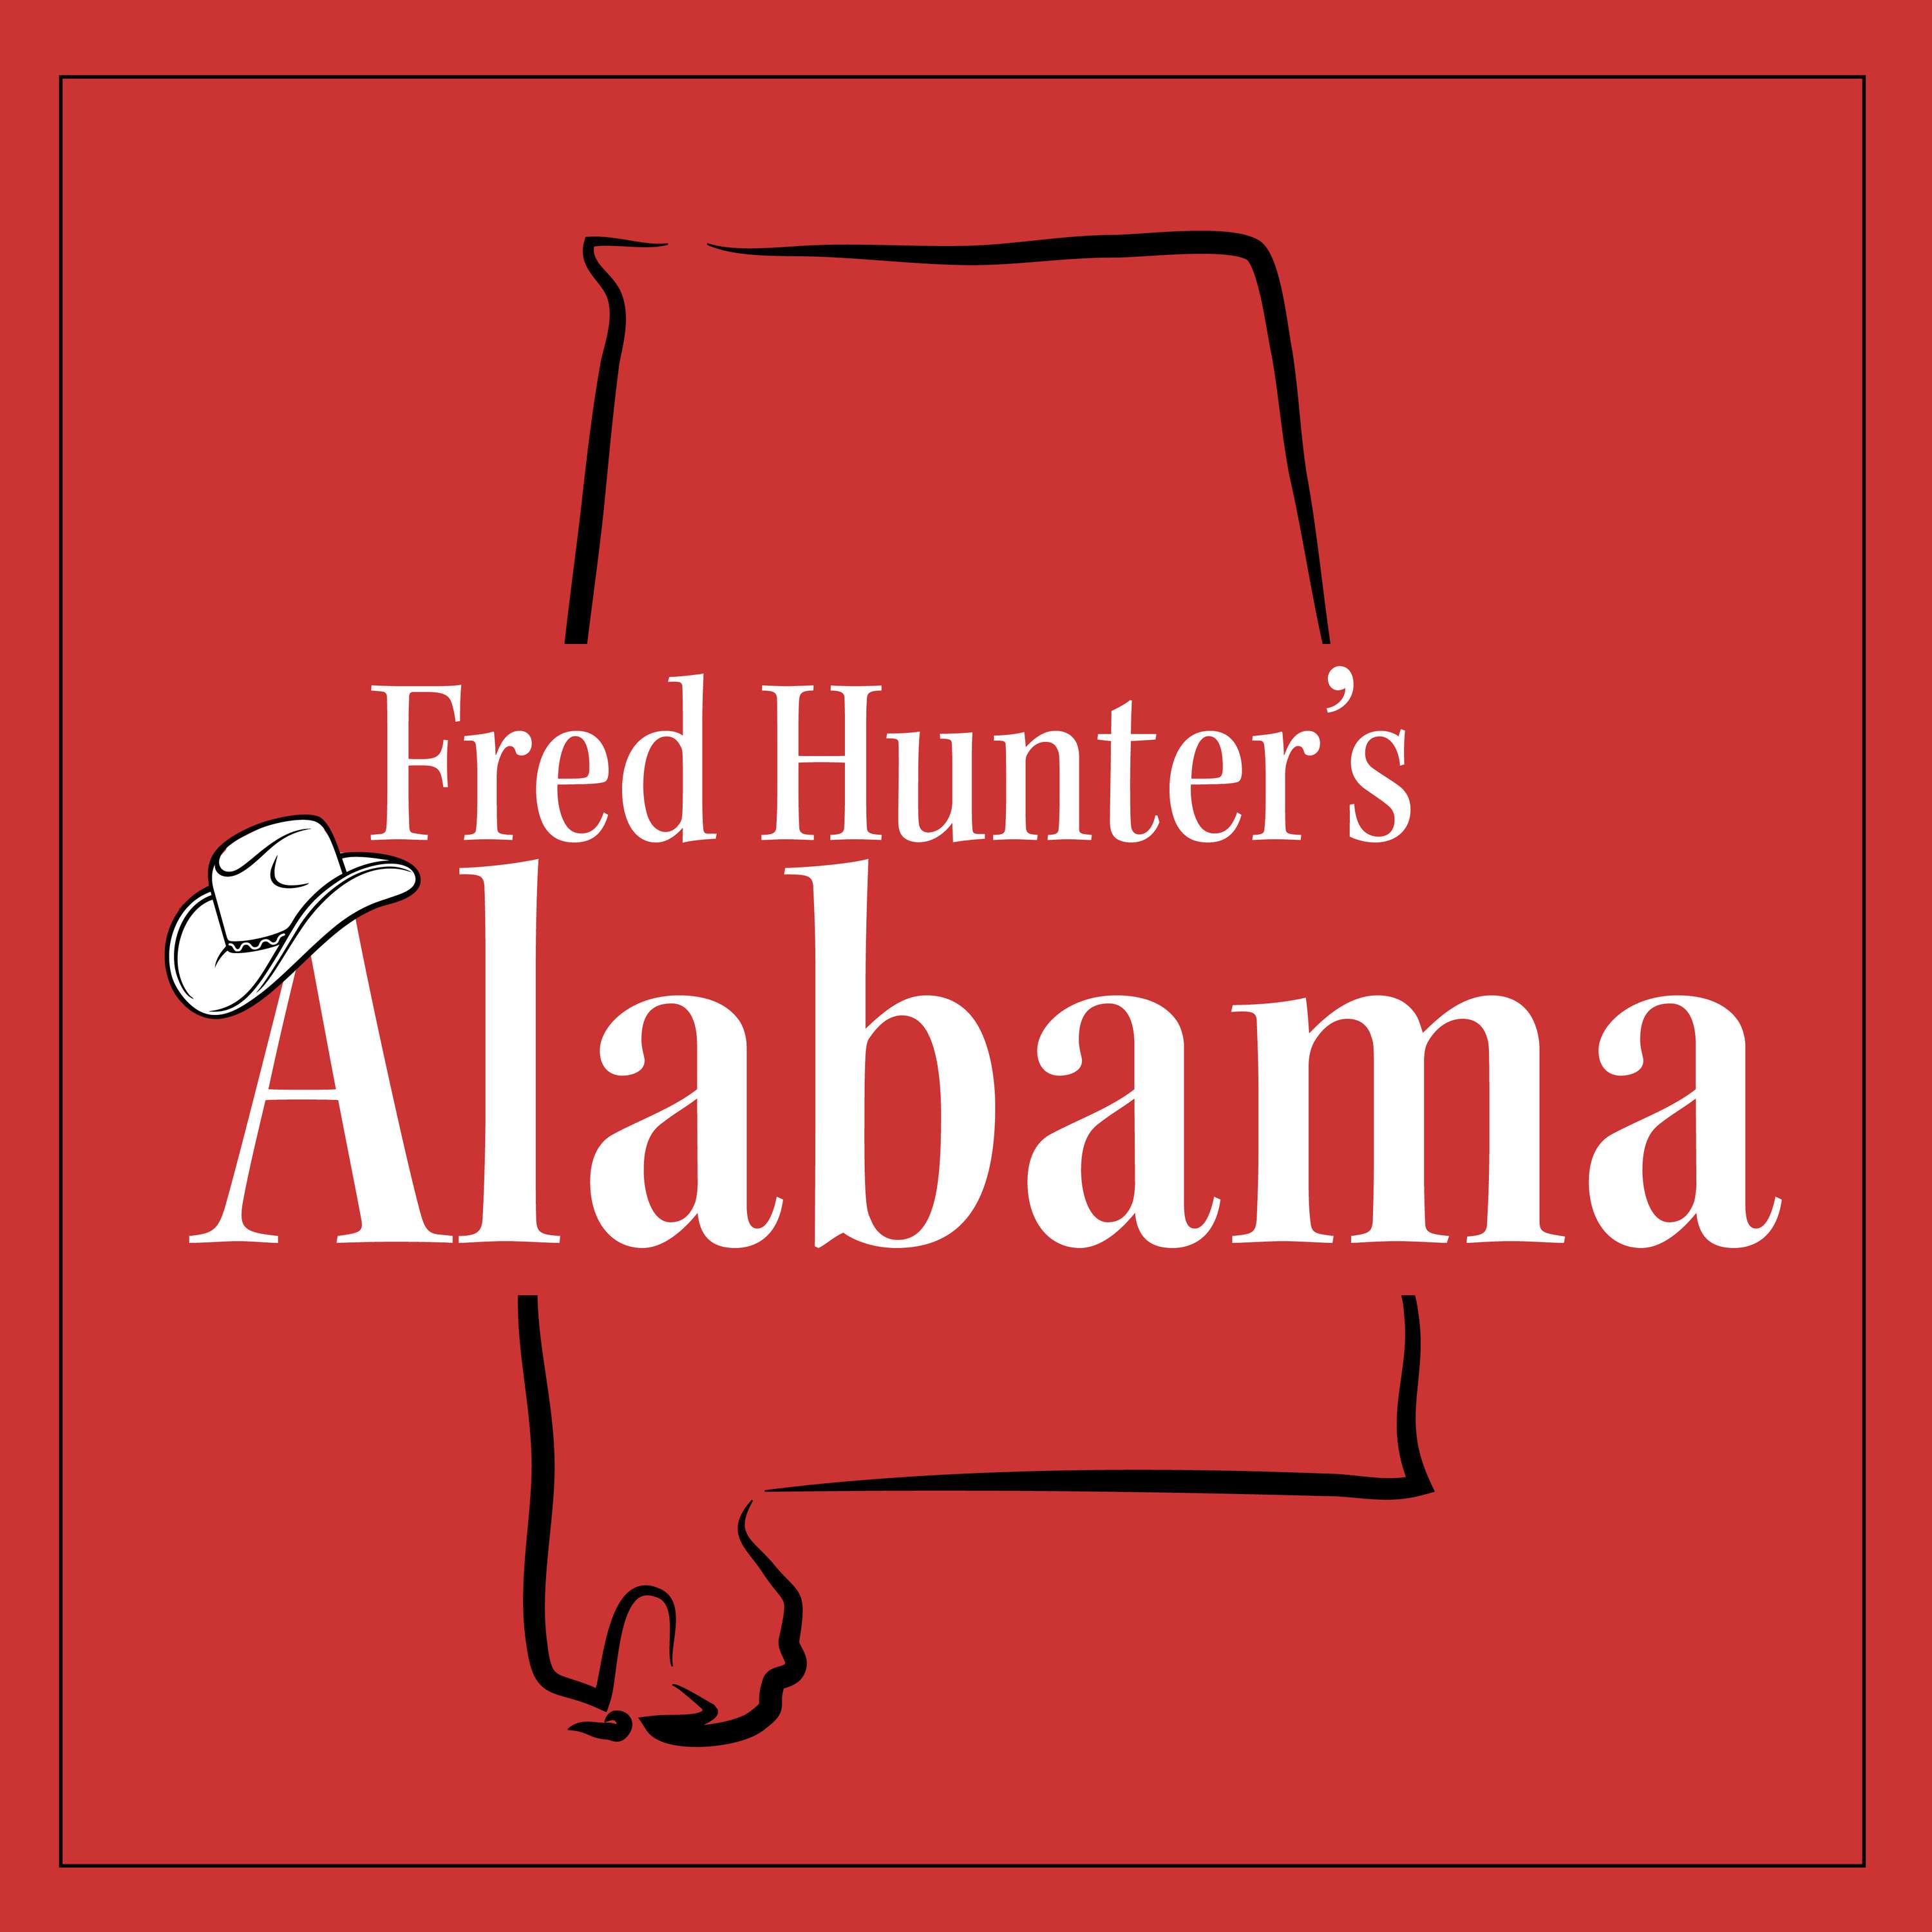 Fred Hunter's Alabama